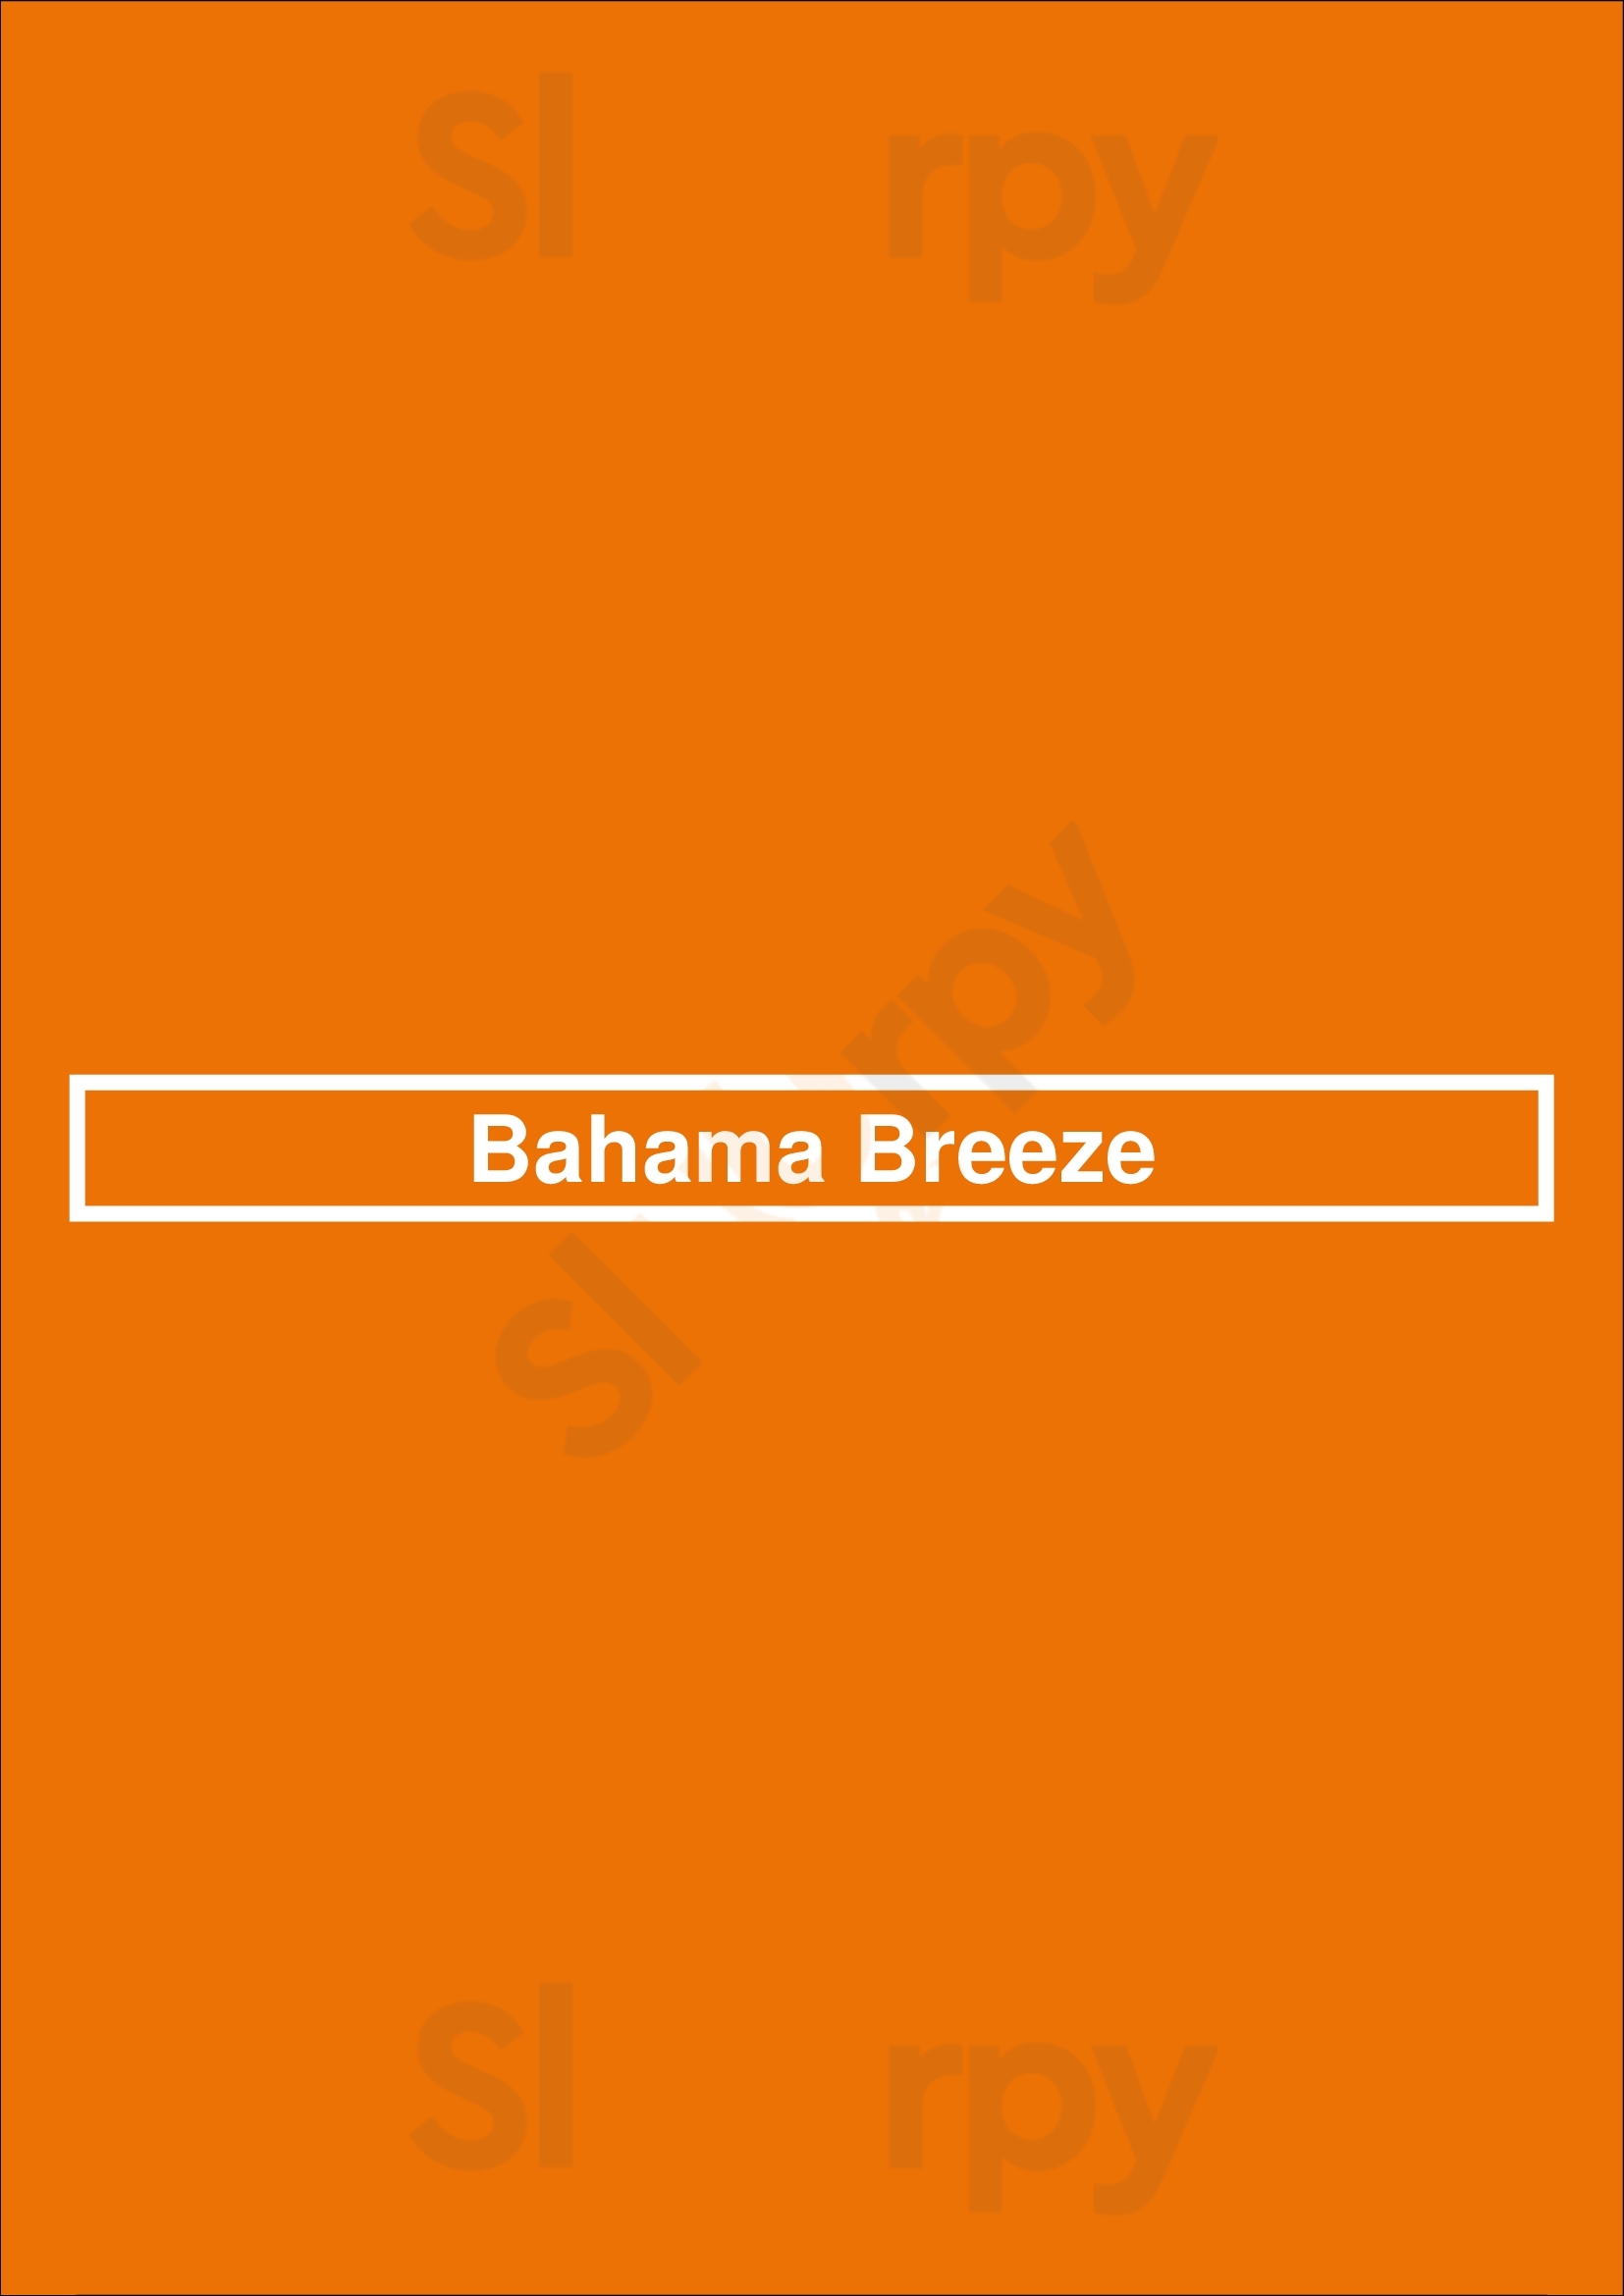 Bahama Breeze Raleigh Menu - 1